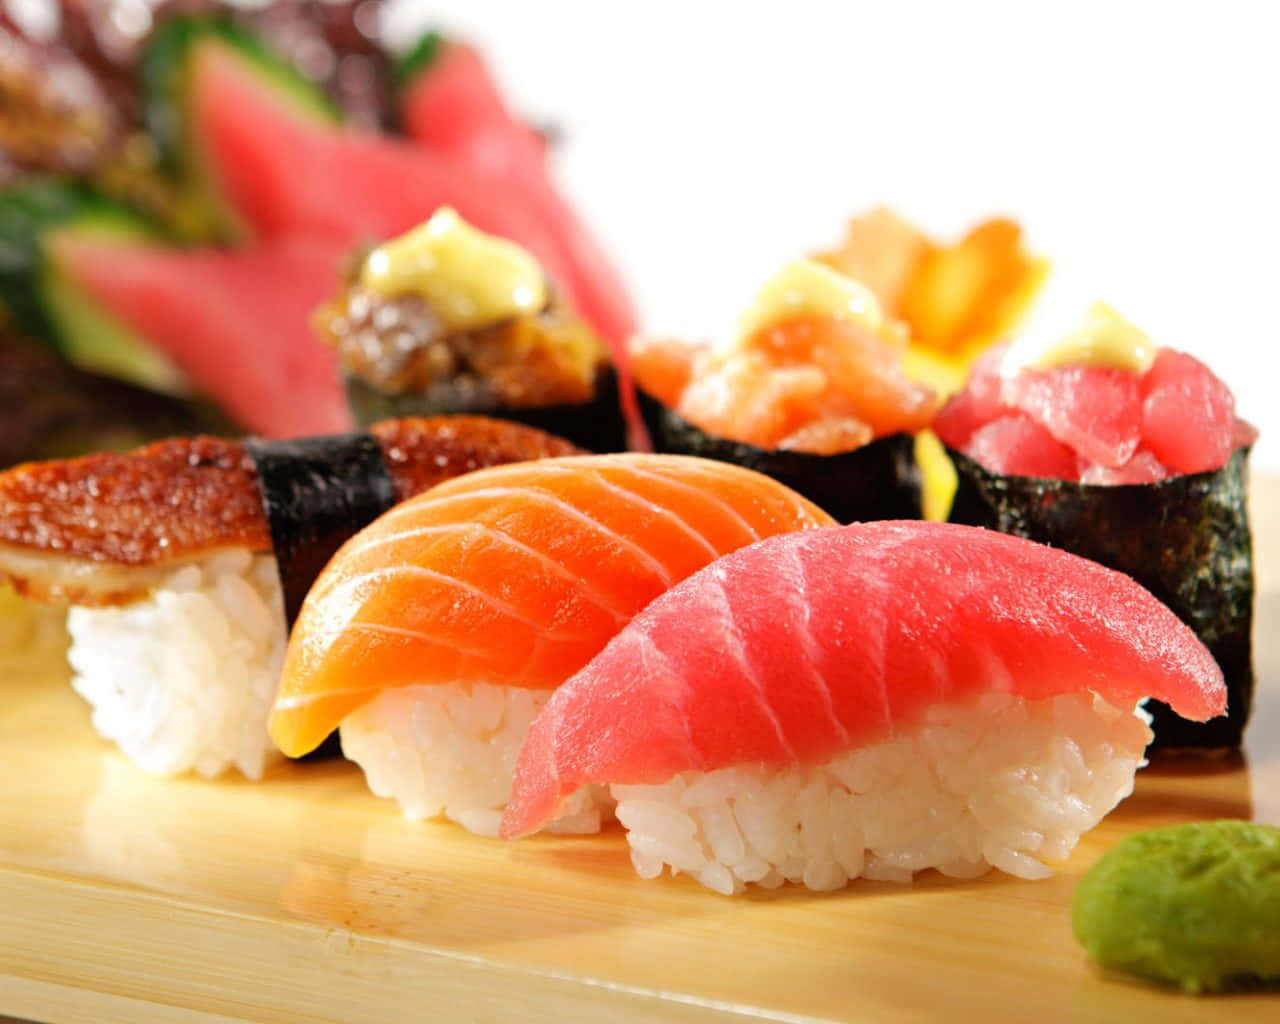 Enjoy the delicious taste of sushi!